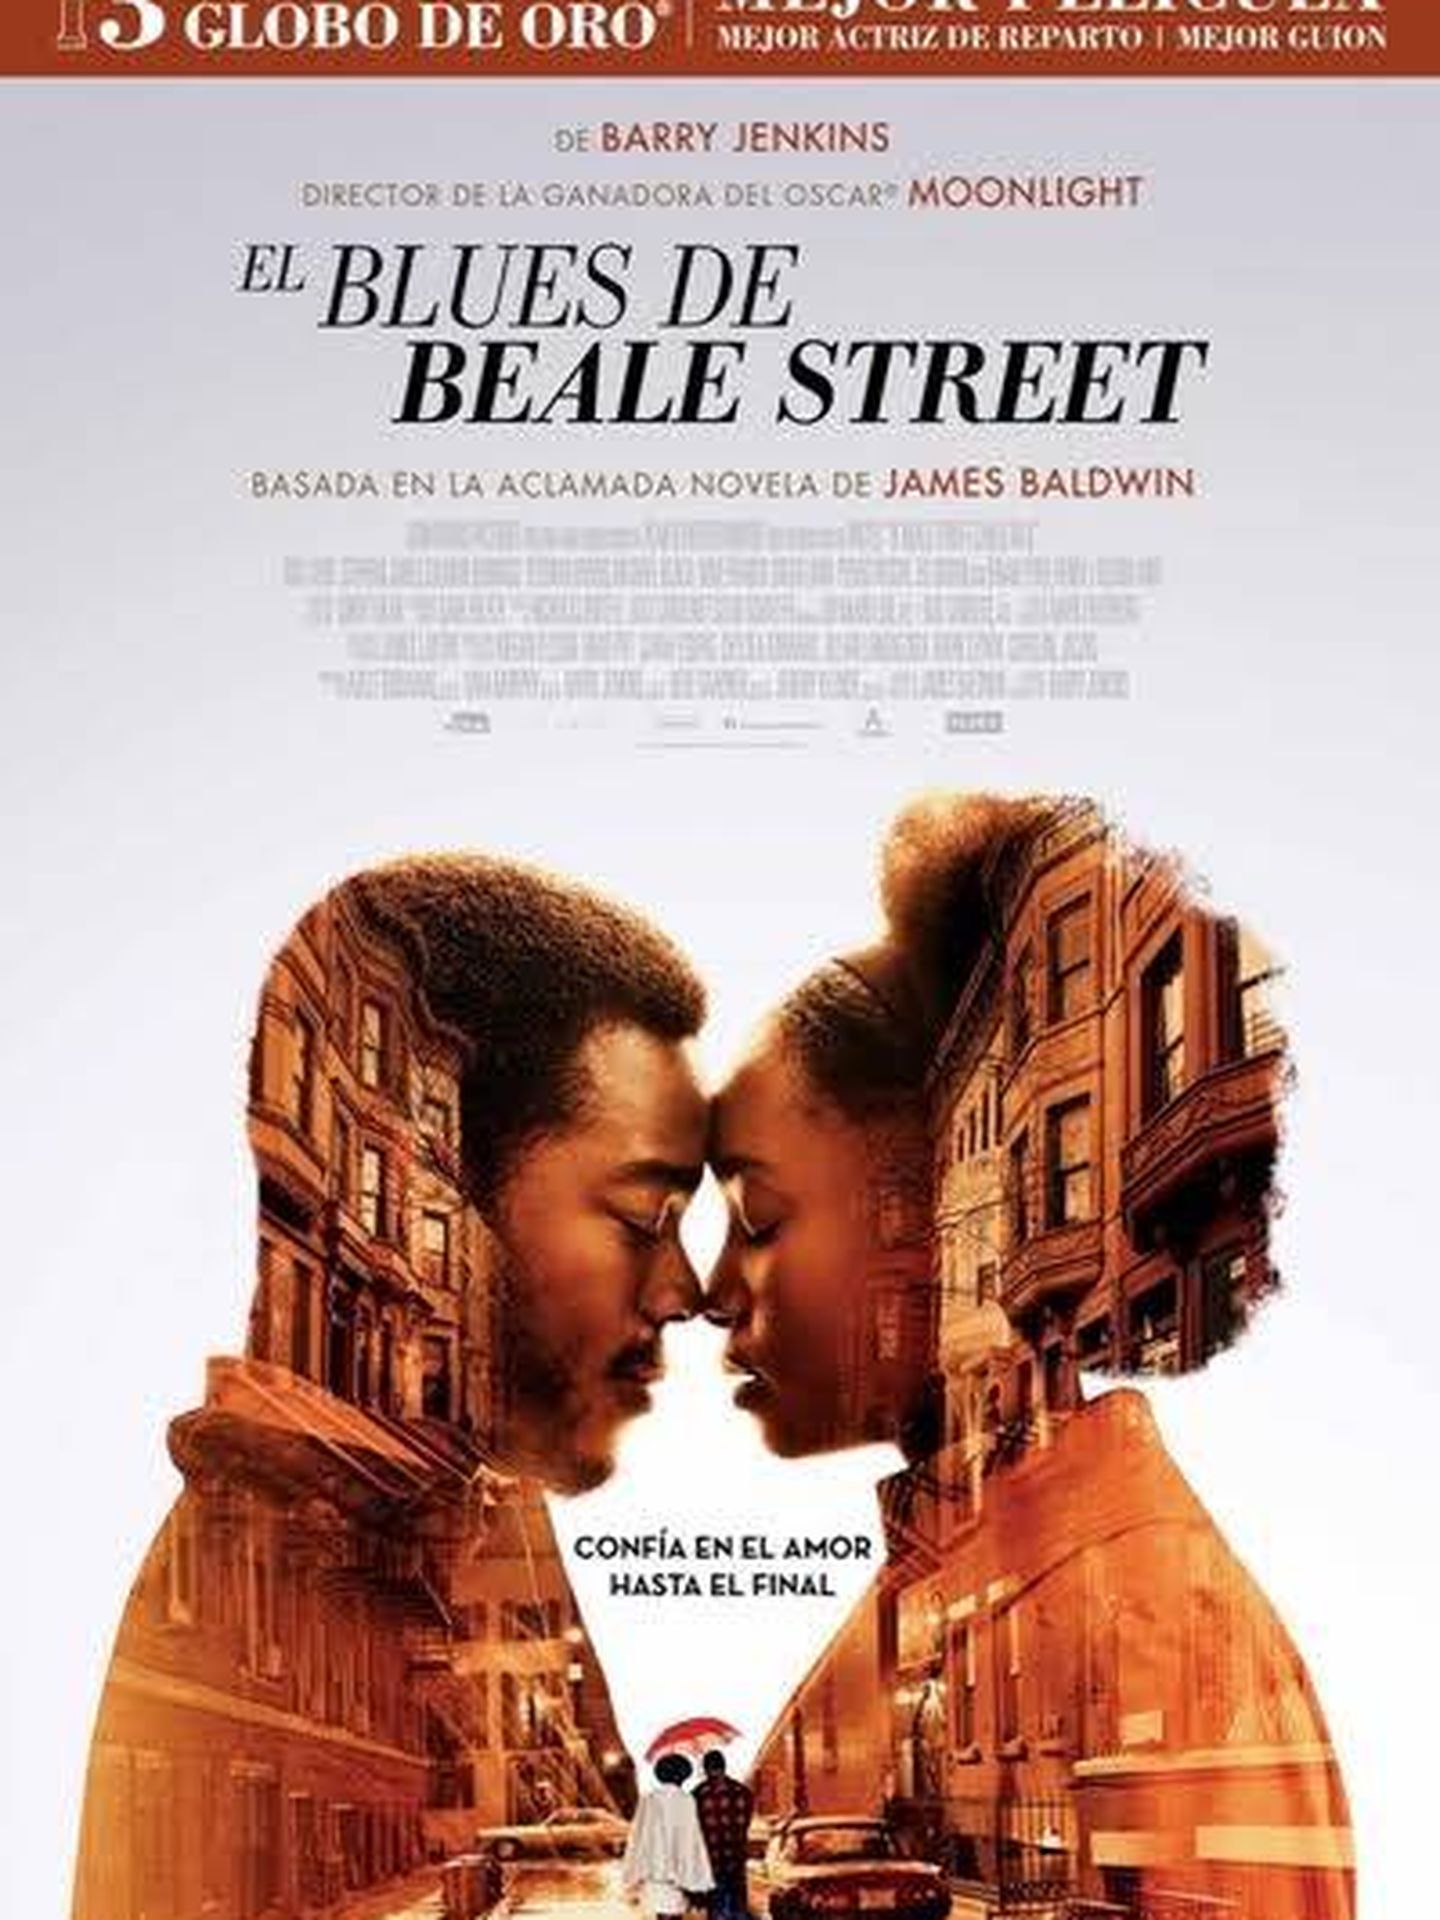 'El blues de Beale Street'.